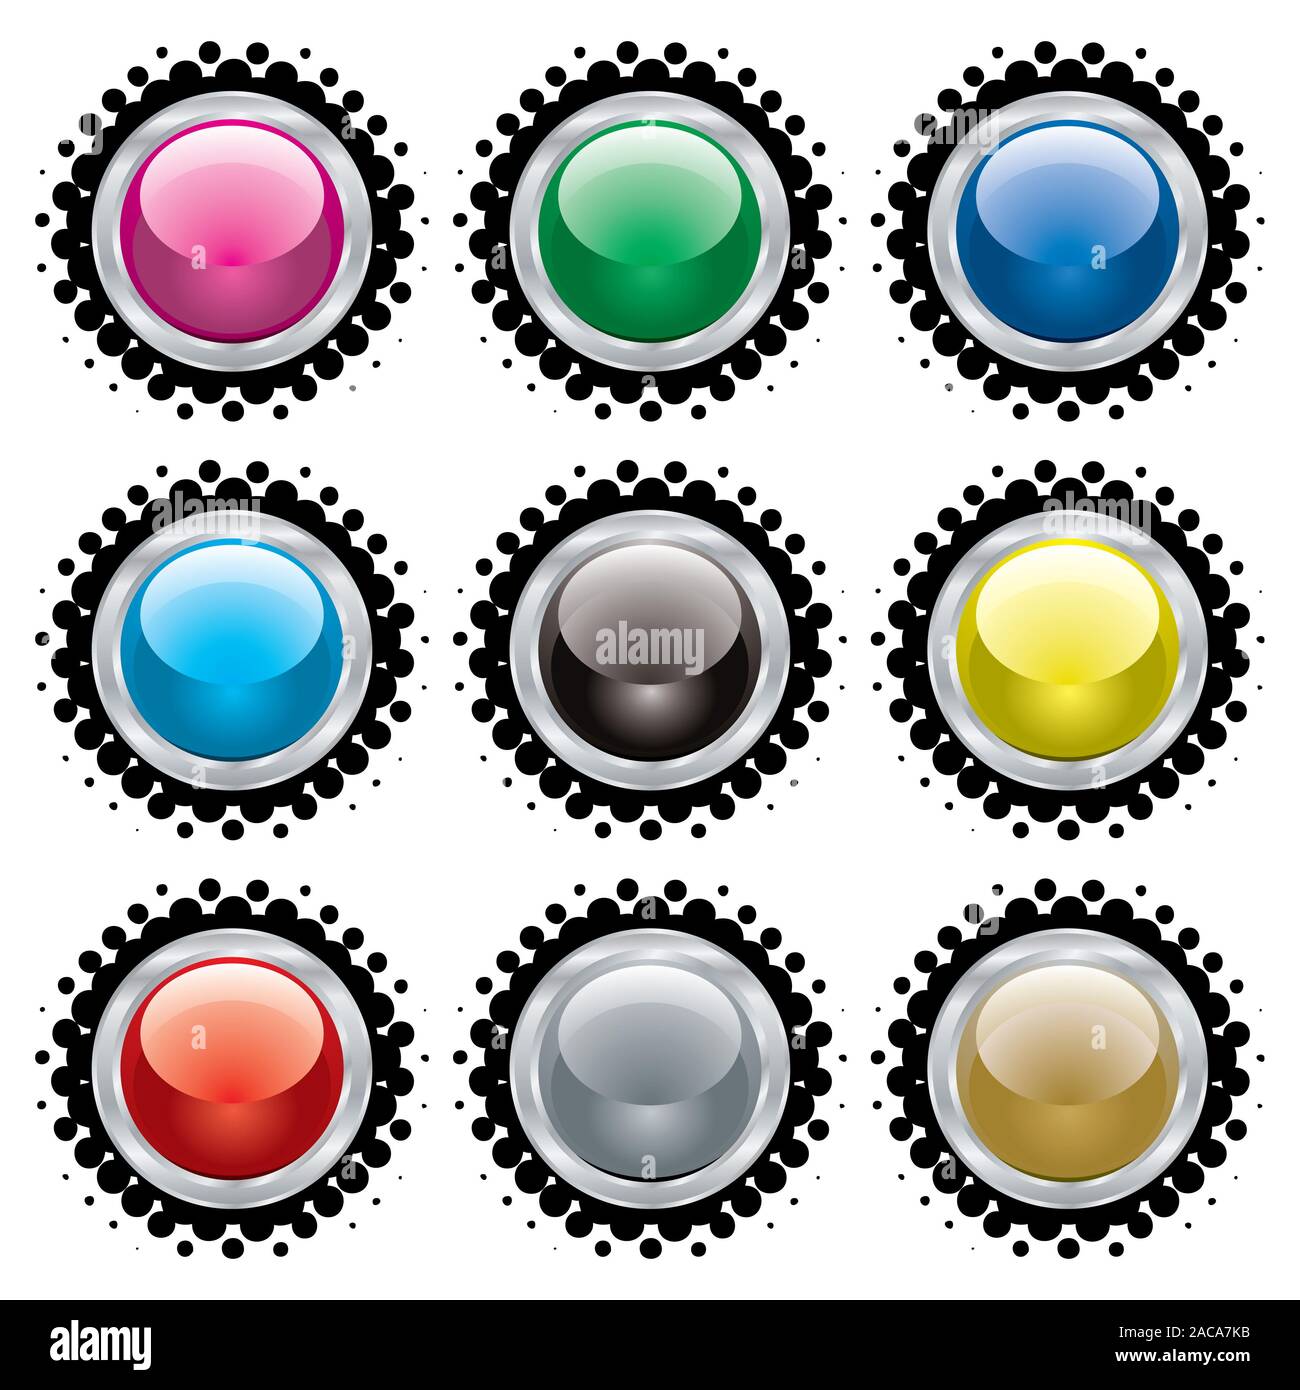 halftone bevel button Stock Photo